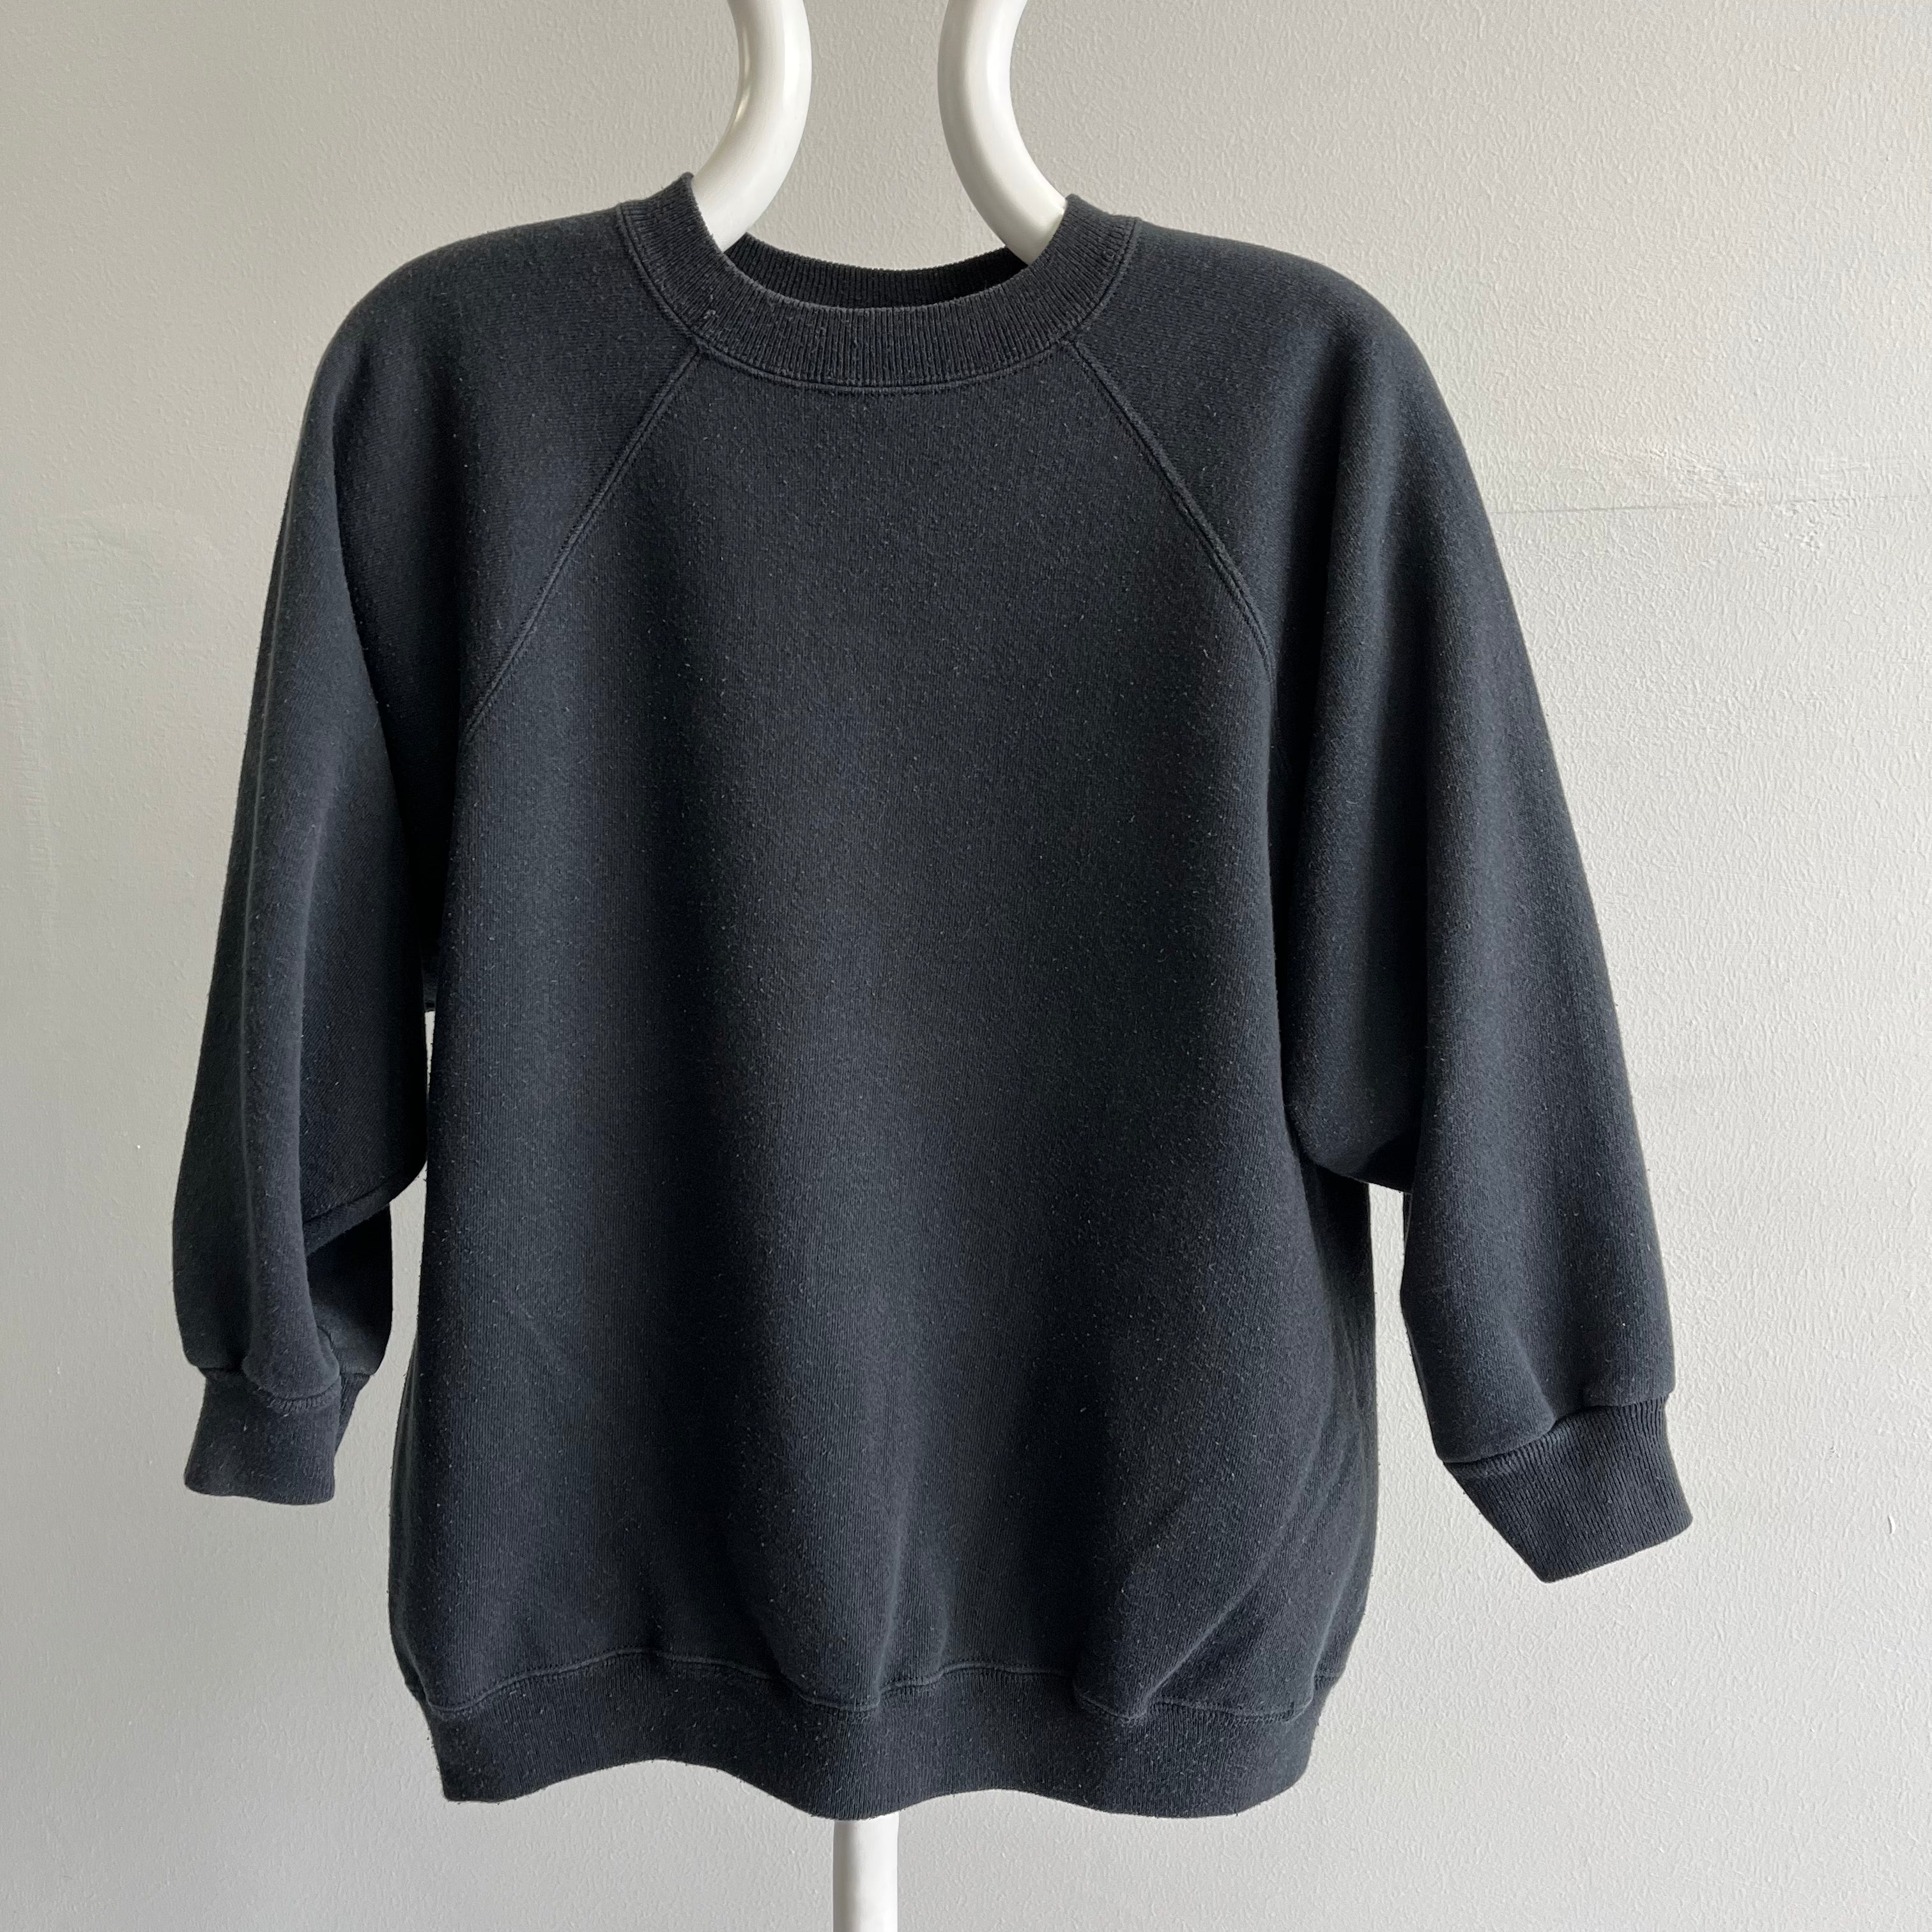 1980s Faded Blank Black Sweatshirt with 3/4 Sleeves